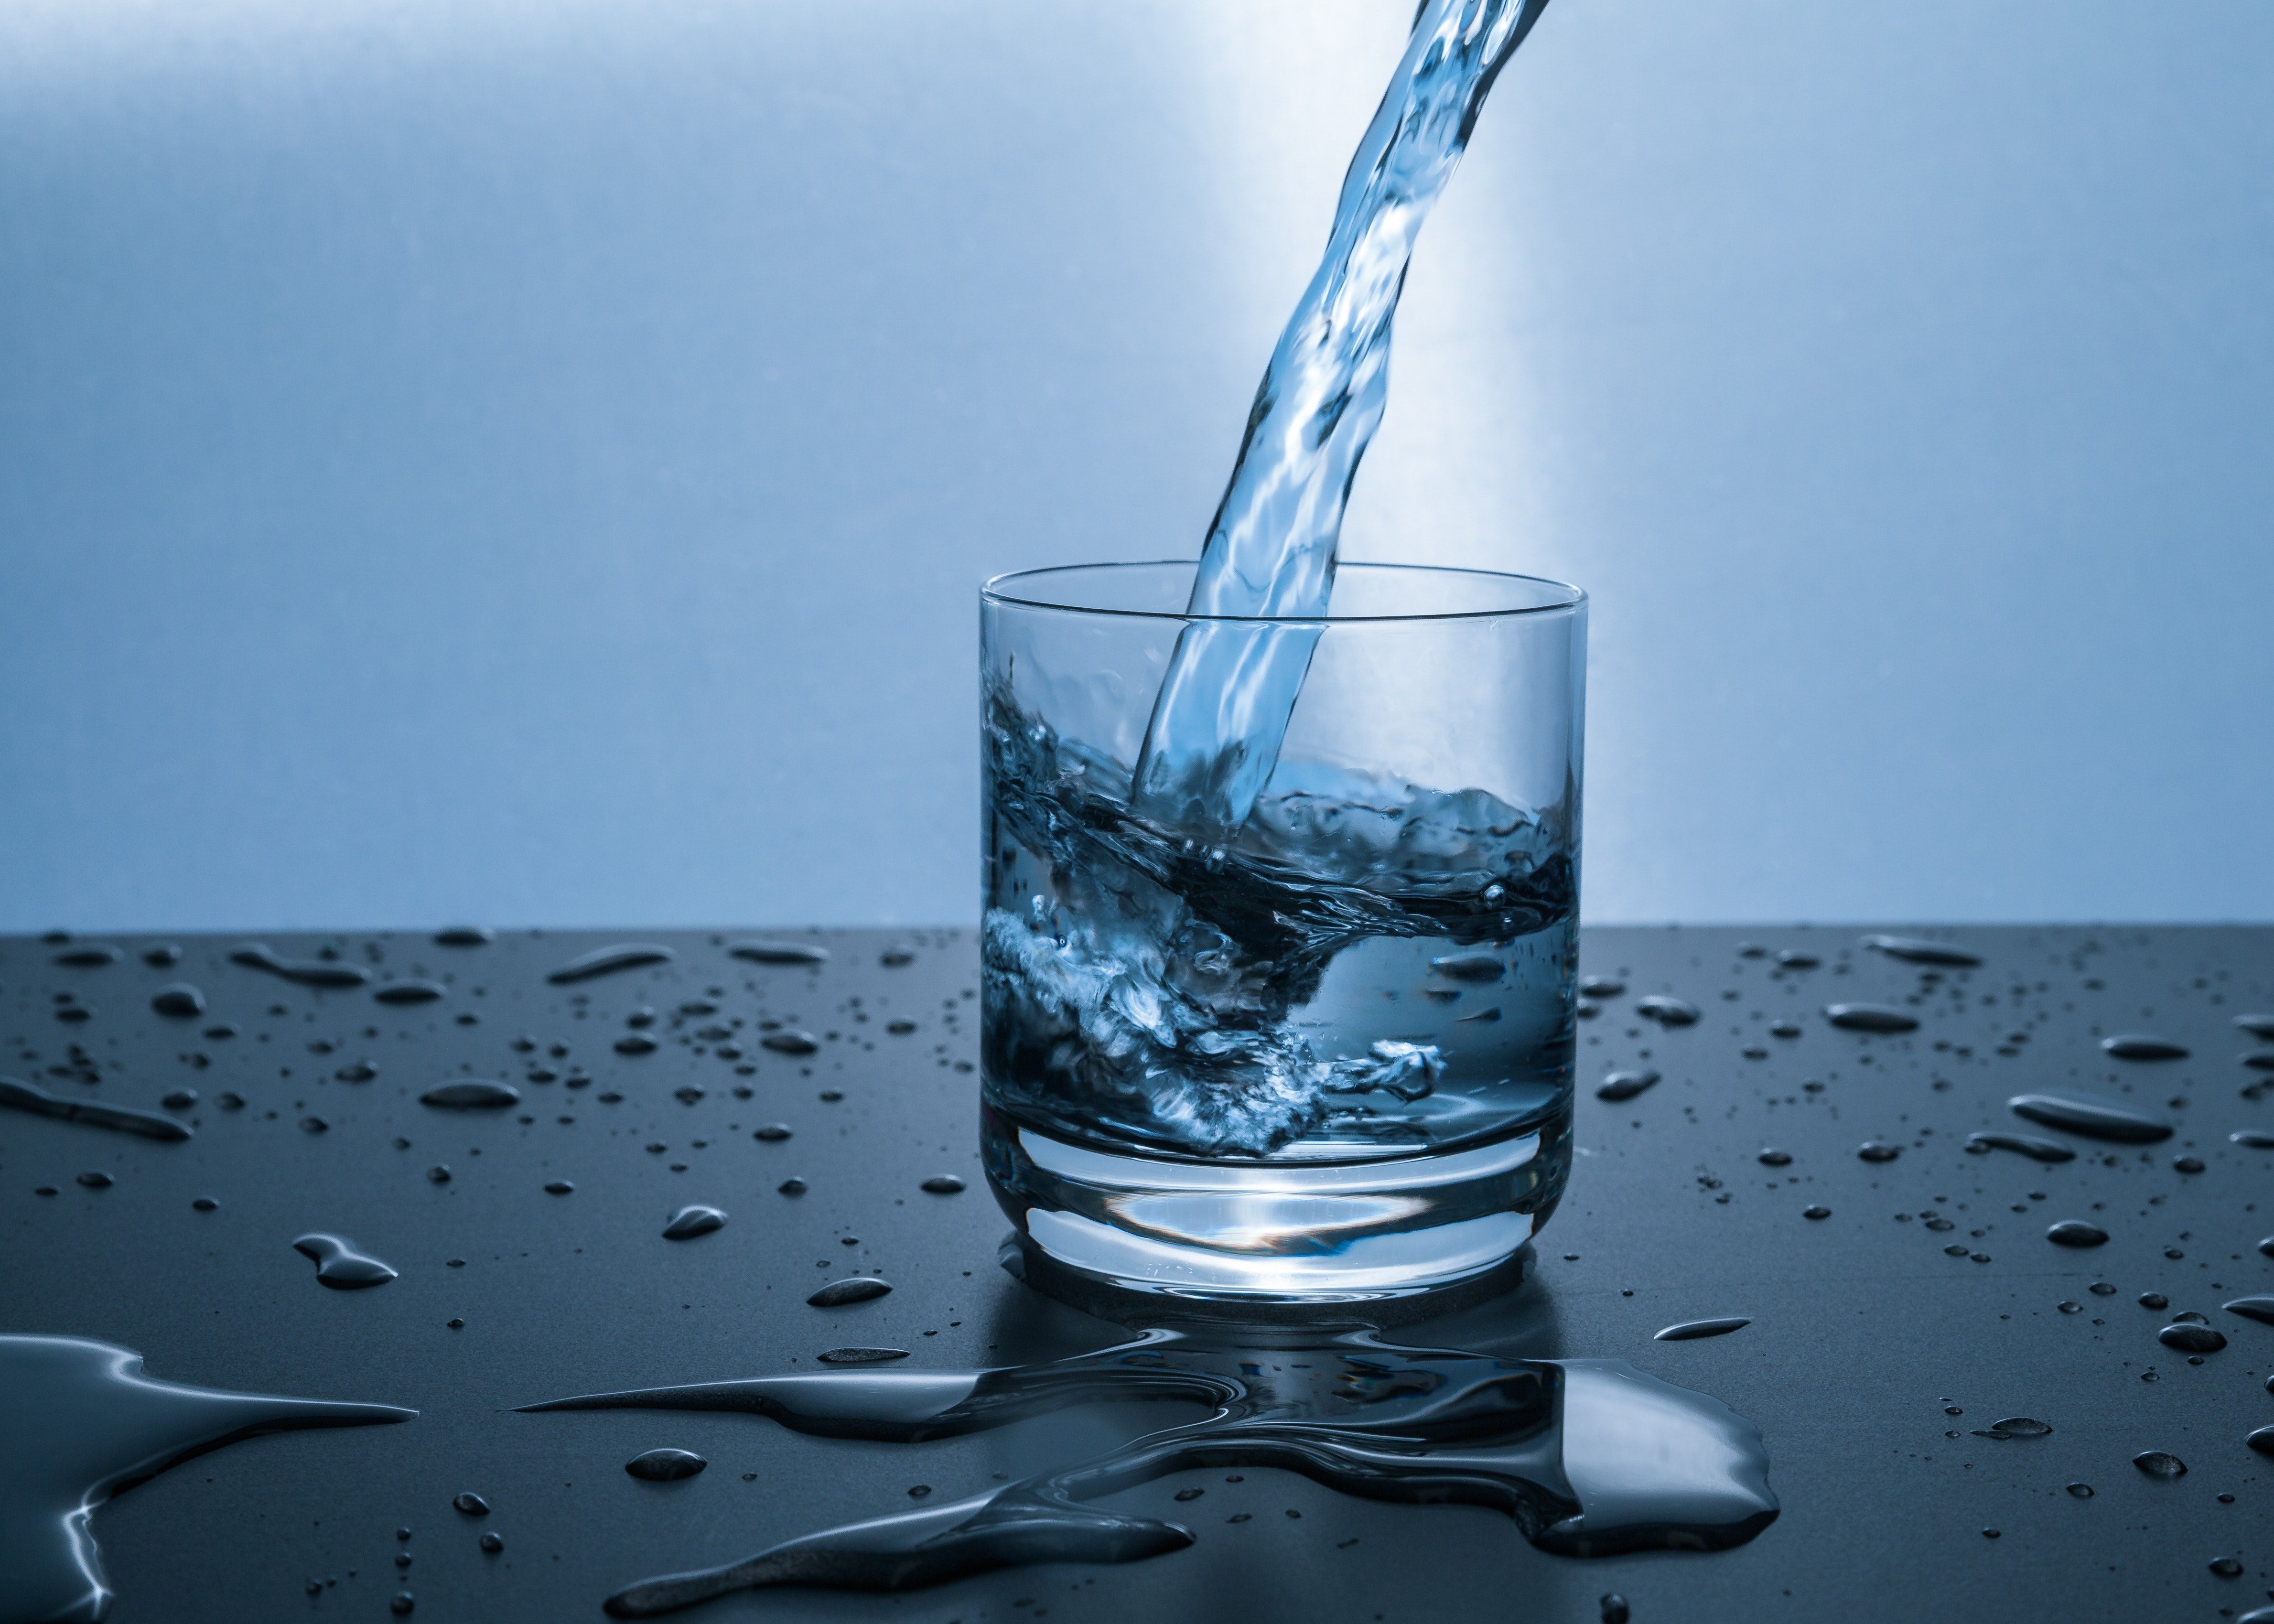 BWT  Best Water Technology – Patty Shop EcoBio